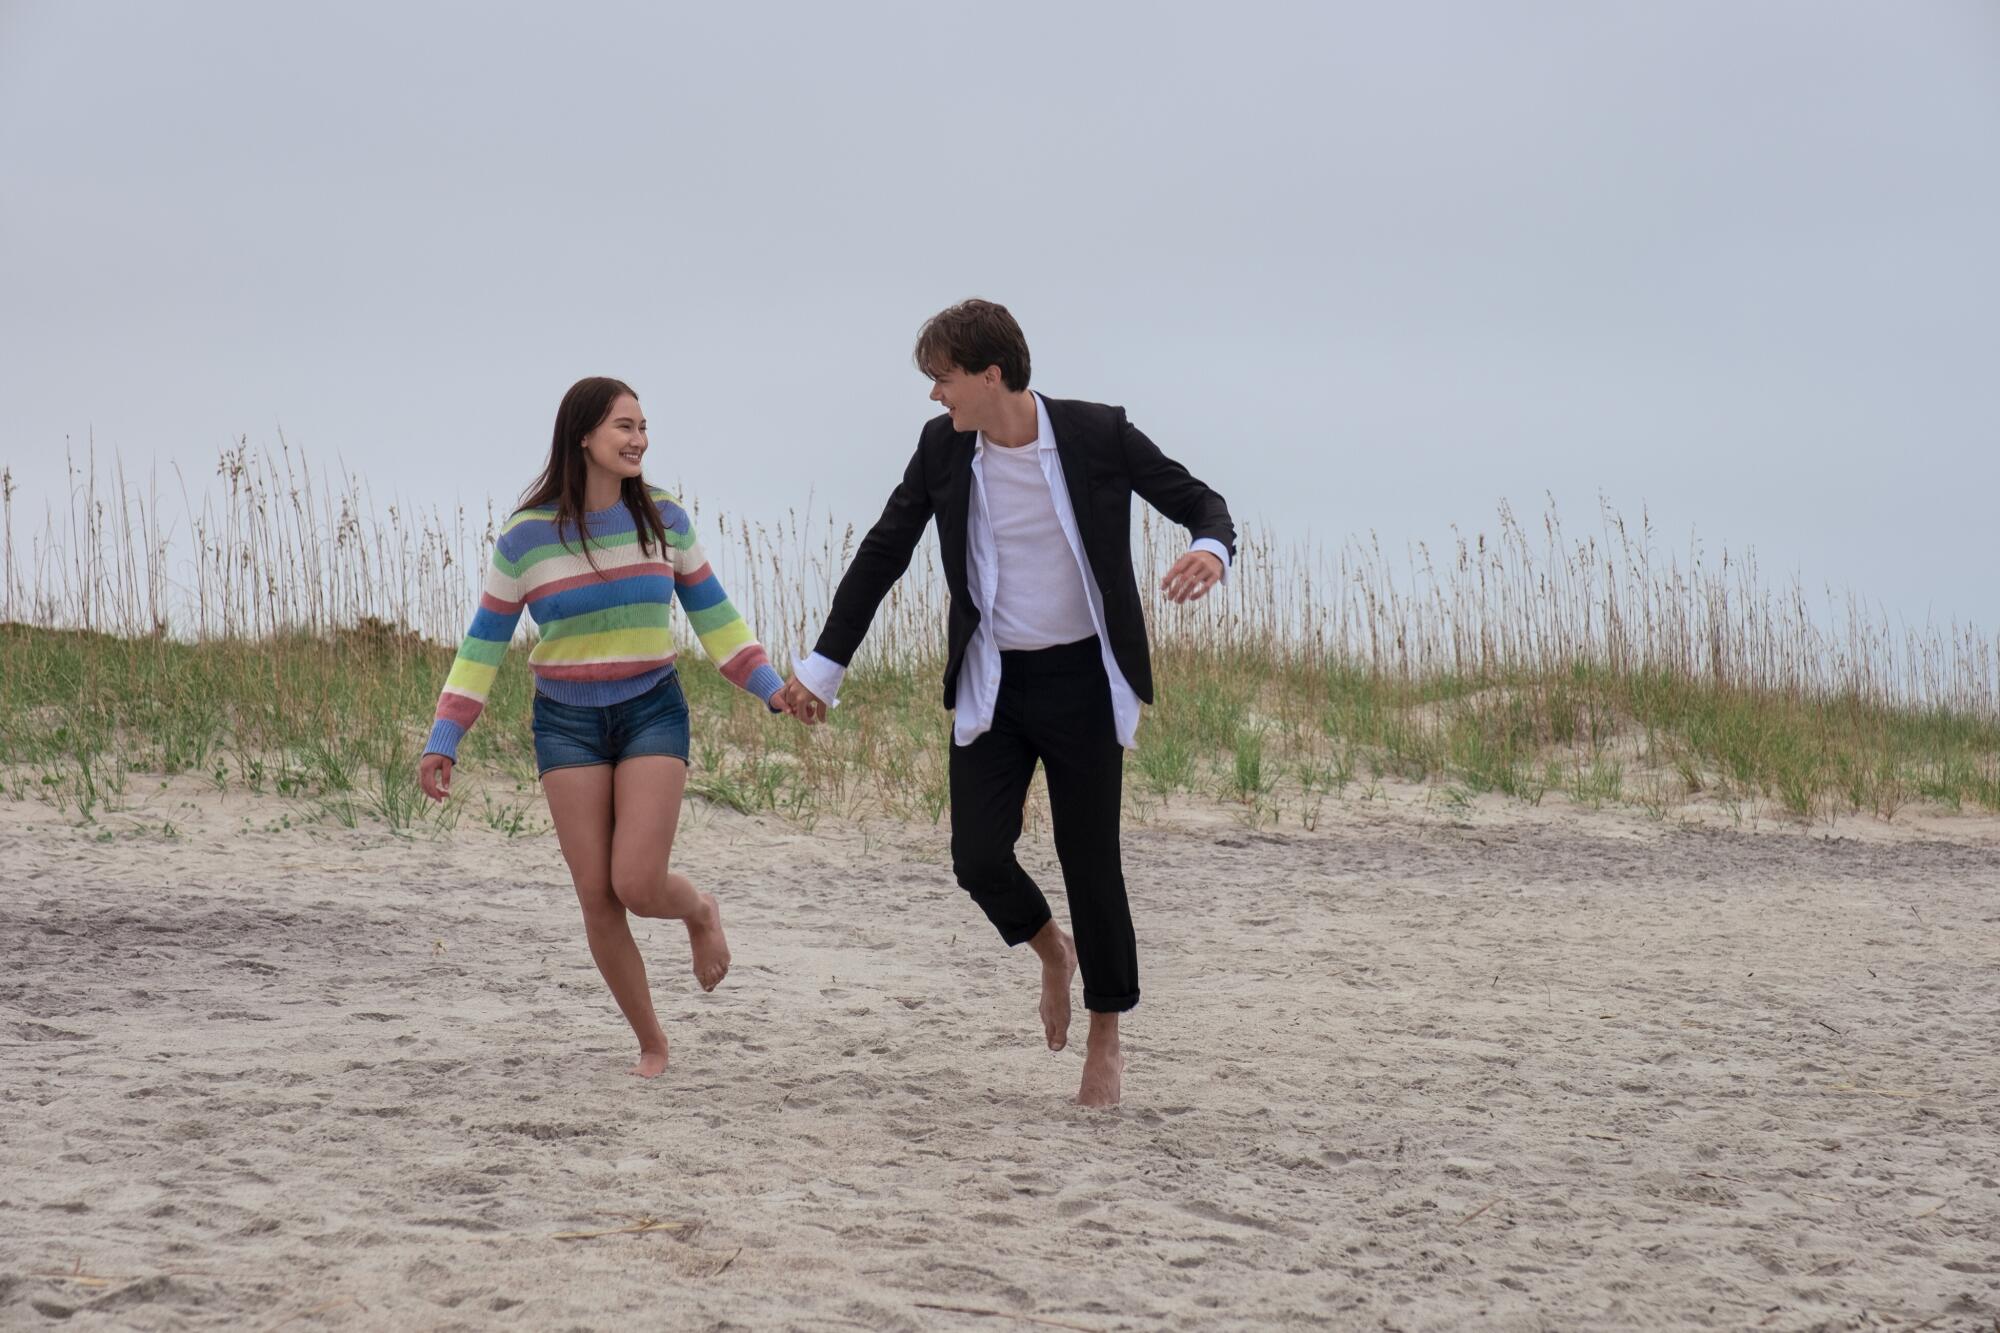 A teenage girl and boy run on a beach holding hands.